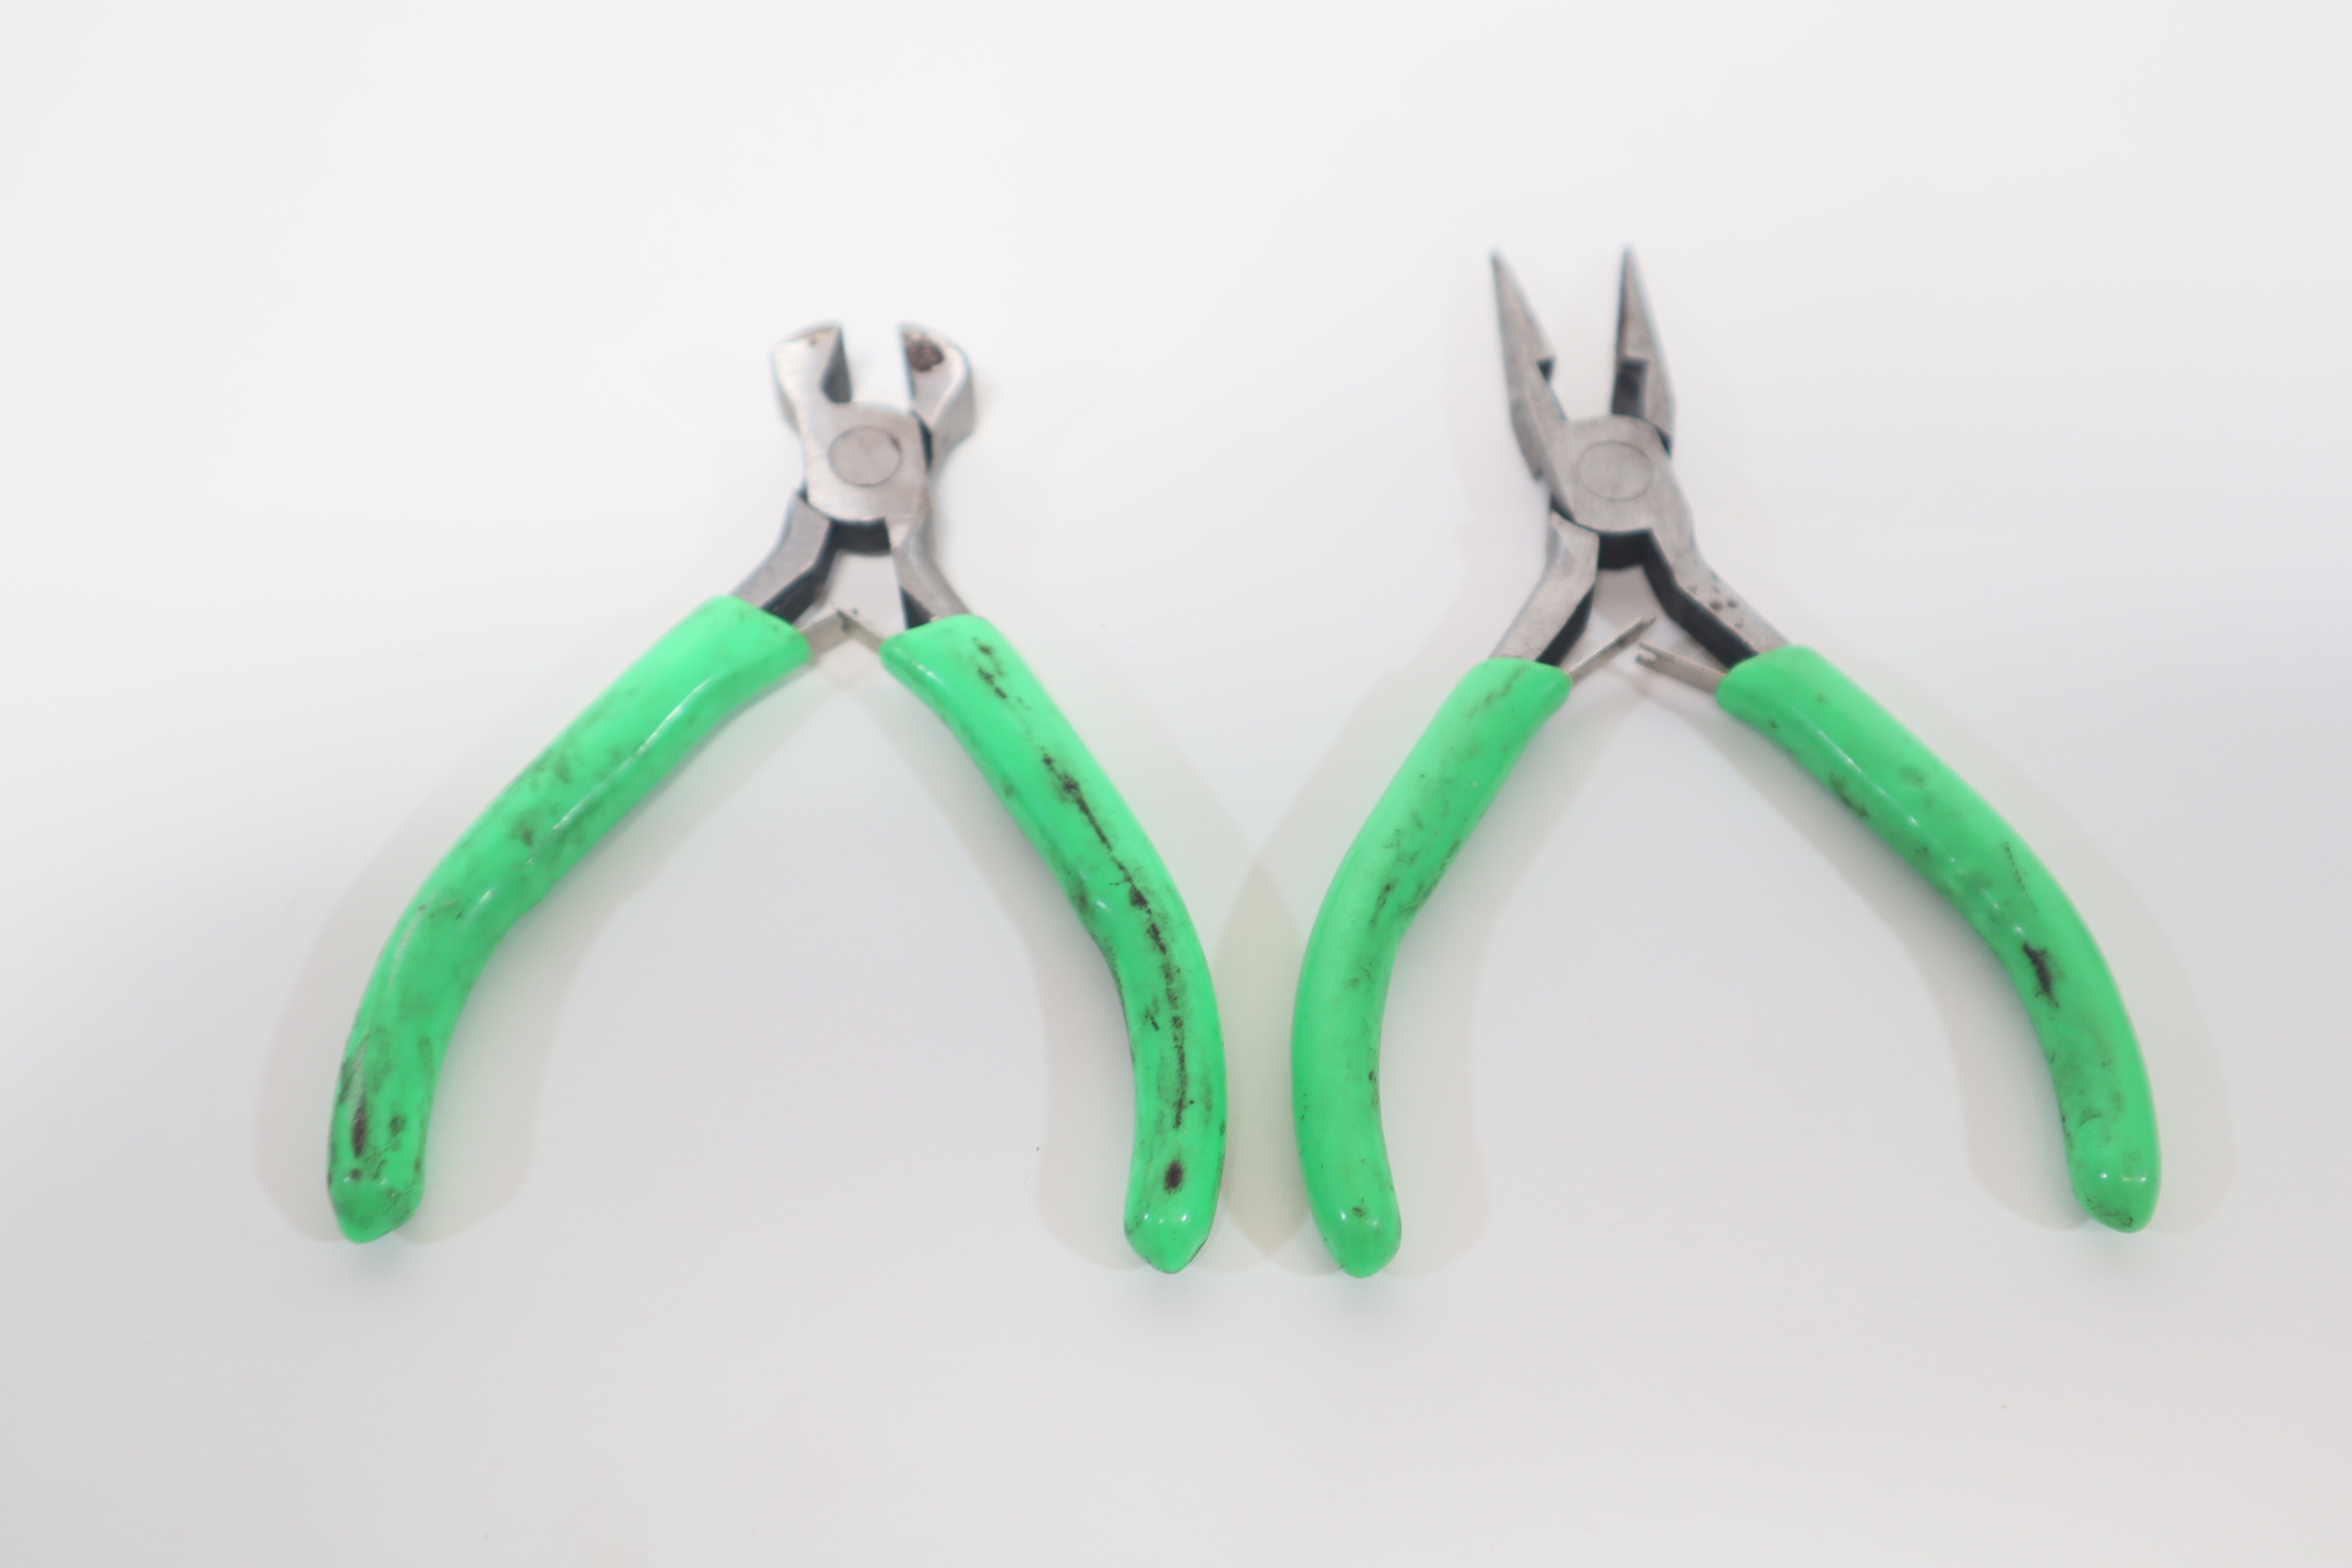 MAC tools Python Long Reach Needle Nose Pliers (set of 3)